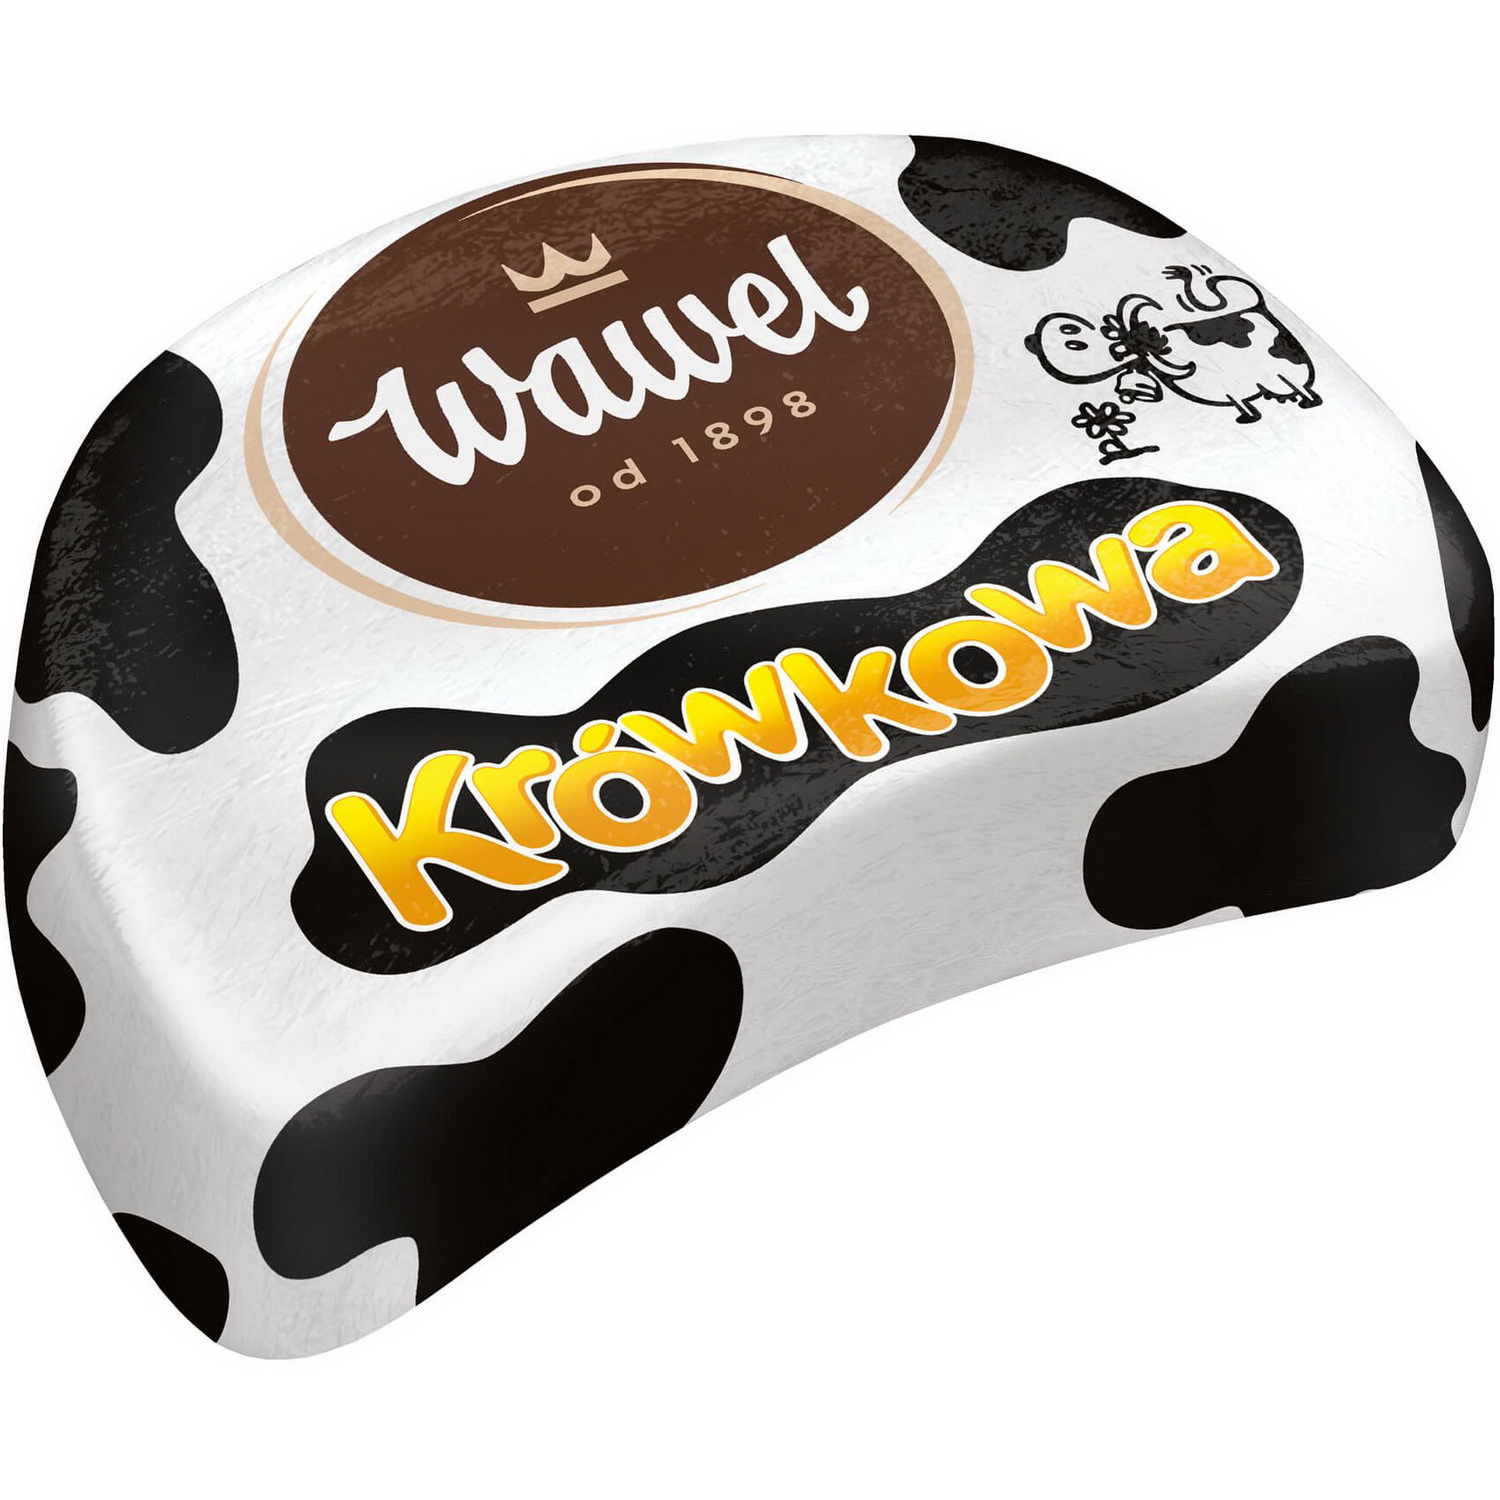 Конфеты Wawel Krowkowa карамель в шоколаде, 330 г (925509) - фото 4